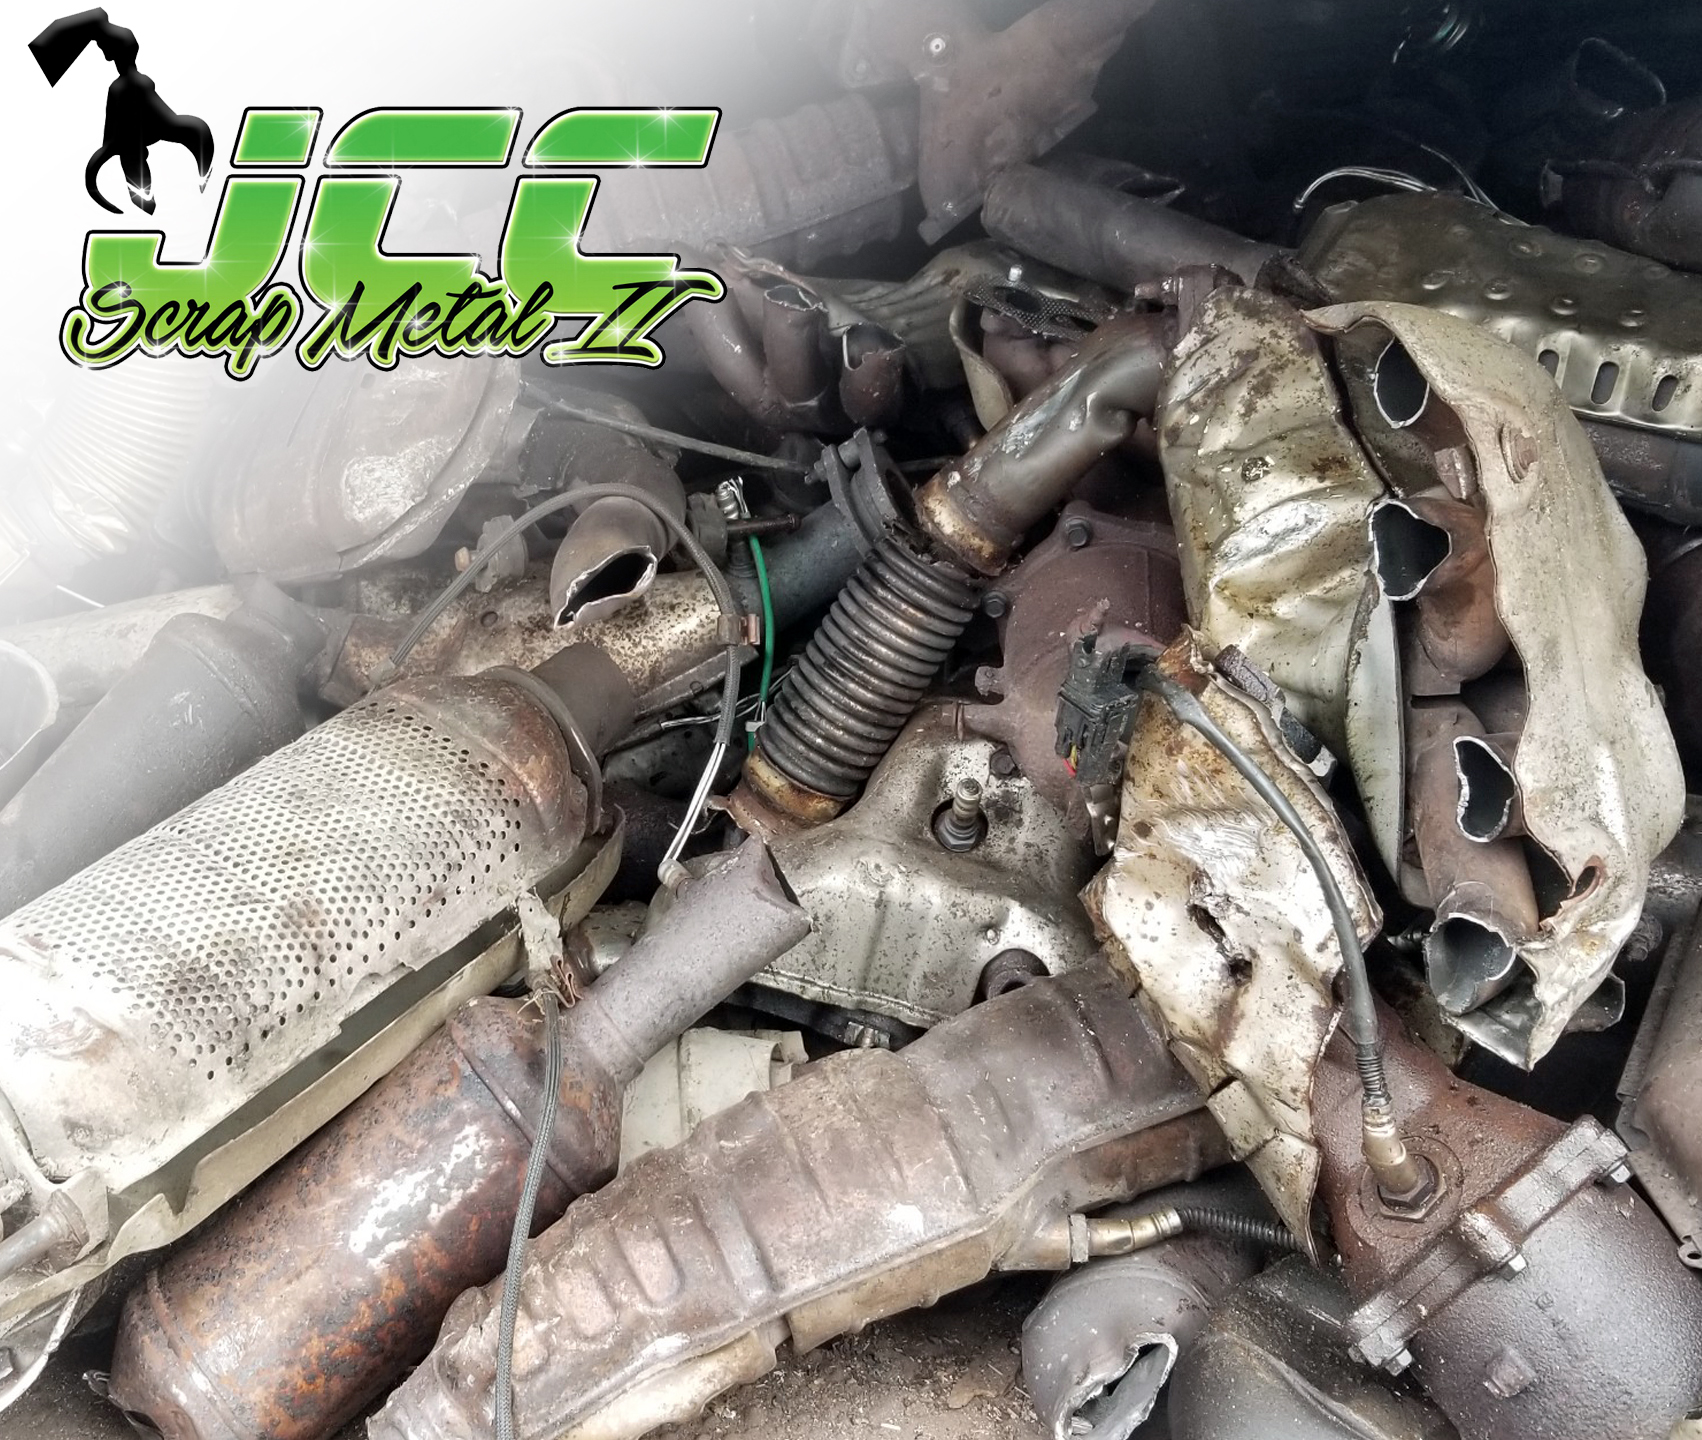 JCC Scrap Metal II, Professional Scrap Metal Recycling Services - Catalytic Converter Junk Metal | 197 Bangor Street, Lindenhurst, NY 11757 | 631-816-2000, jccscrapmetal2@gmail.com - Catalytic Converter Junk Metal Image